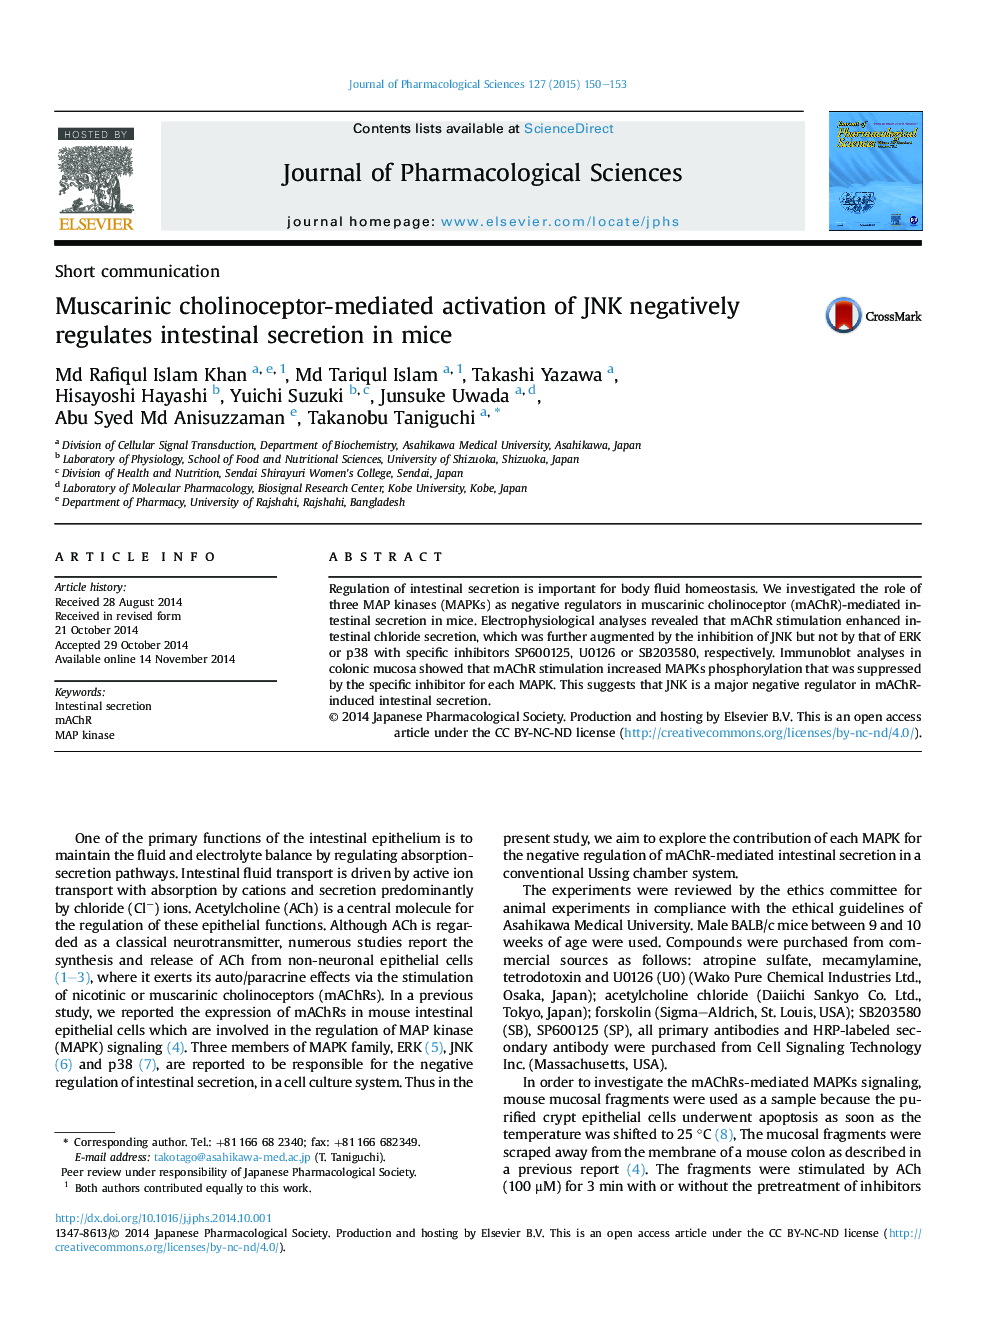 Muscarinic cholinoceptor-mediated activation of JNK negatively regulates intestinal secretion in mice 